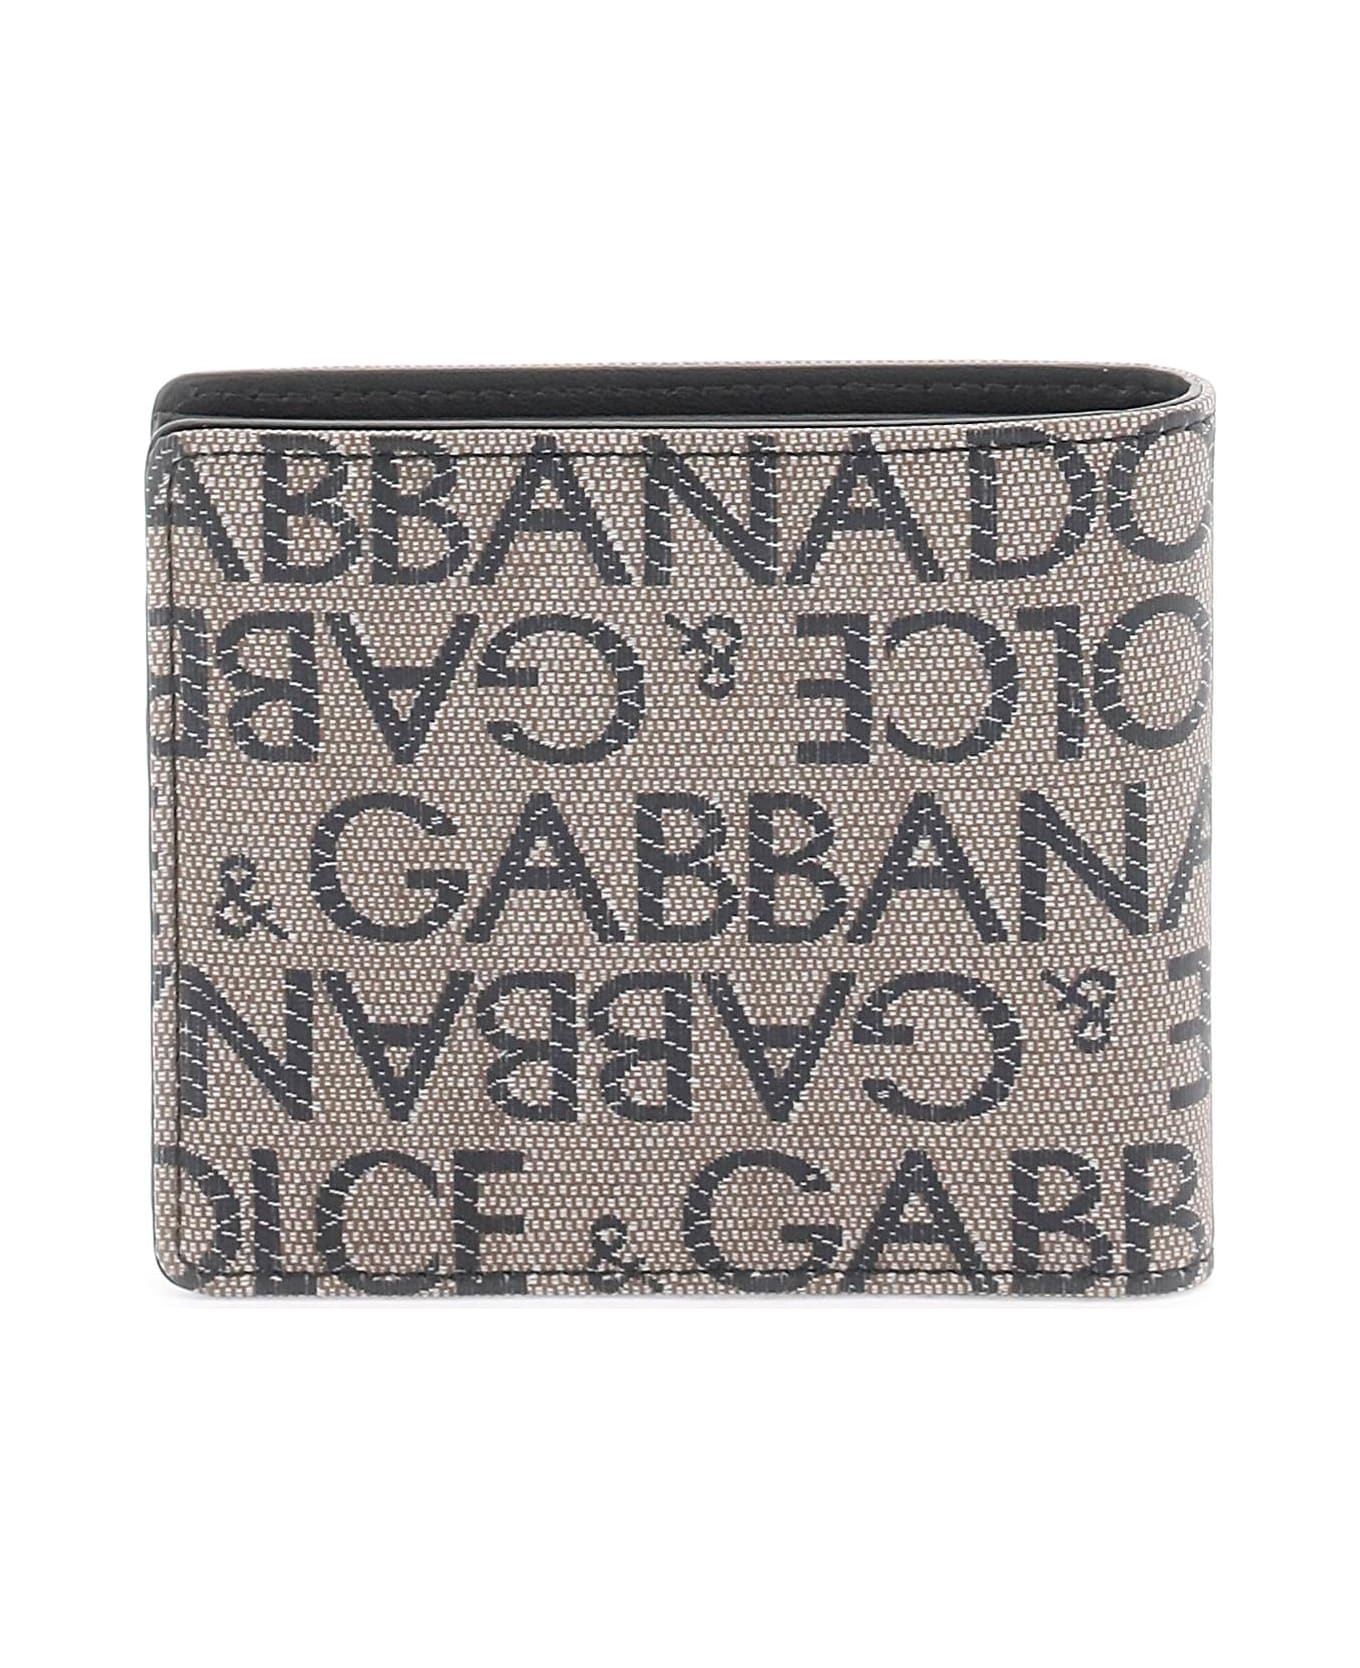 Dolce & Gabbana Jacquard Wallet - Brown / Black